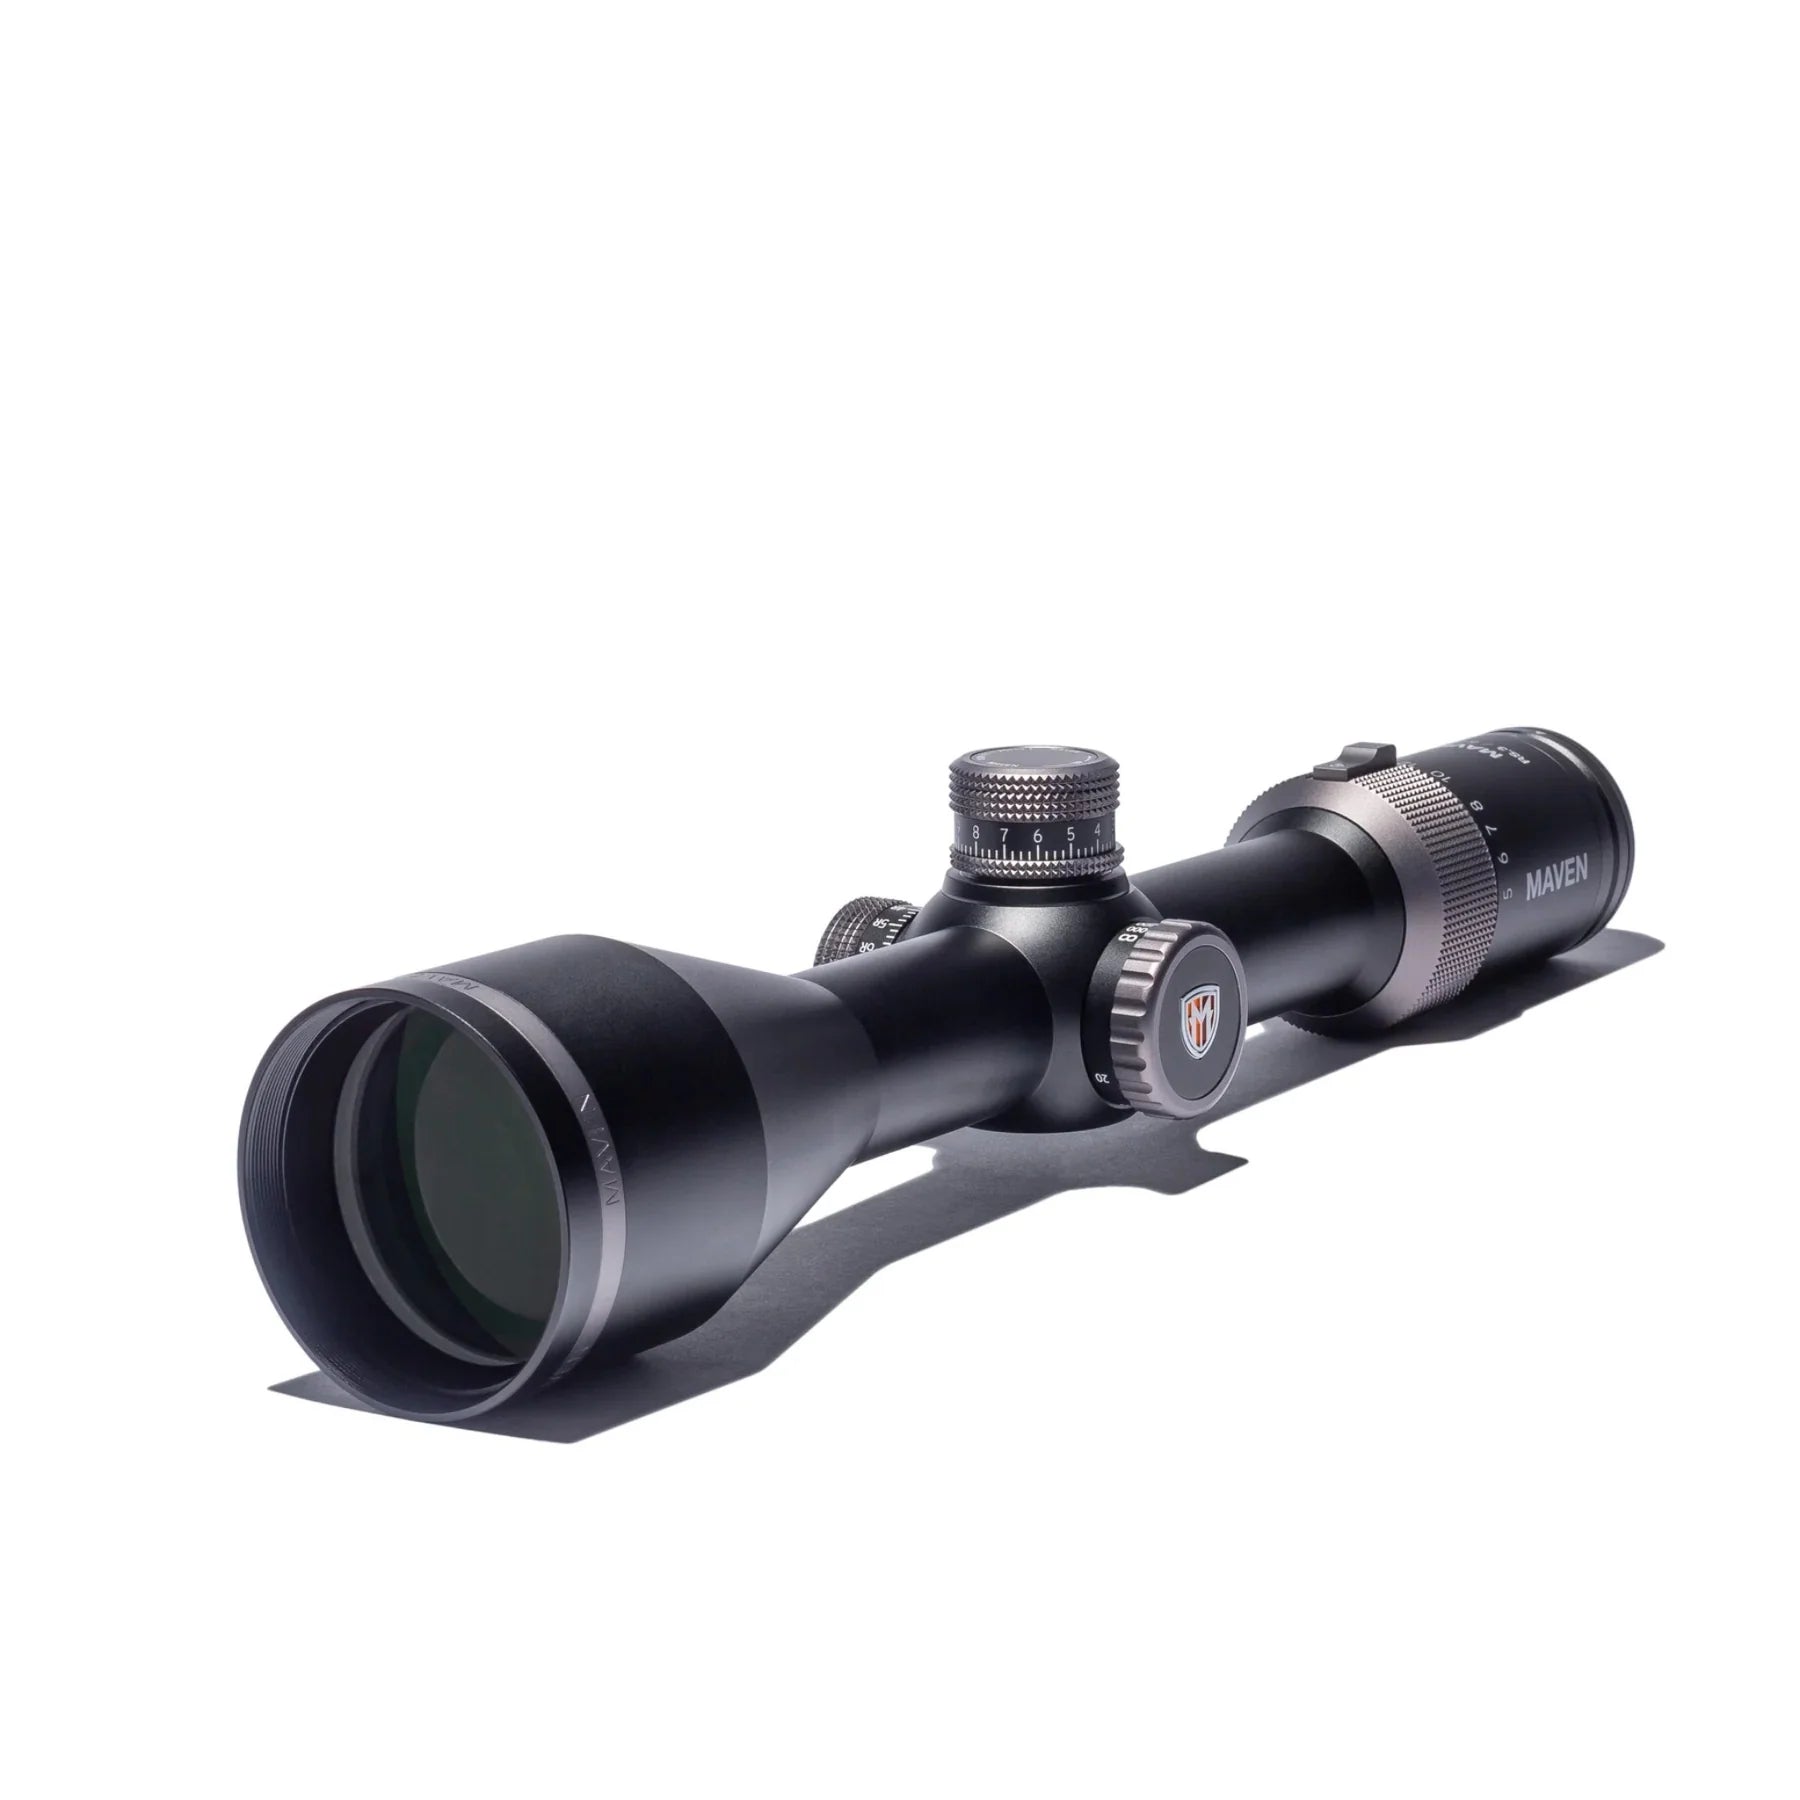 MAVEN RS3 Riflescope - 5-30x50 FFP